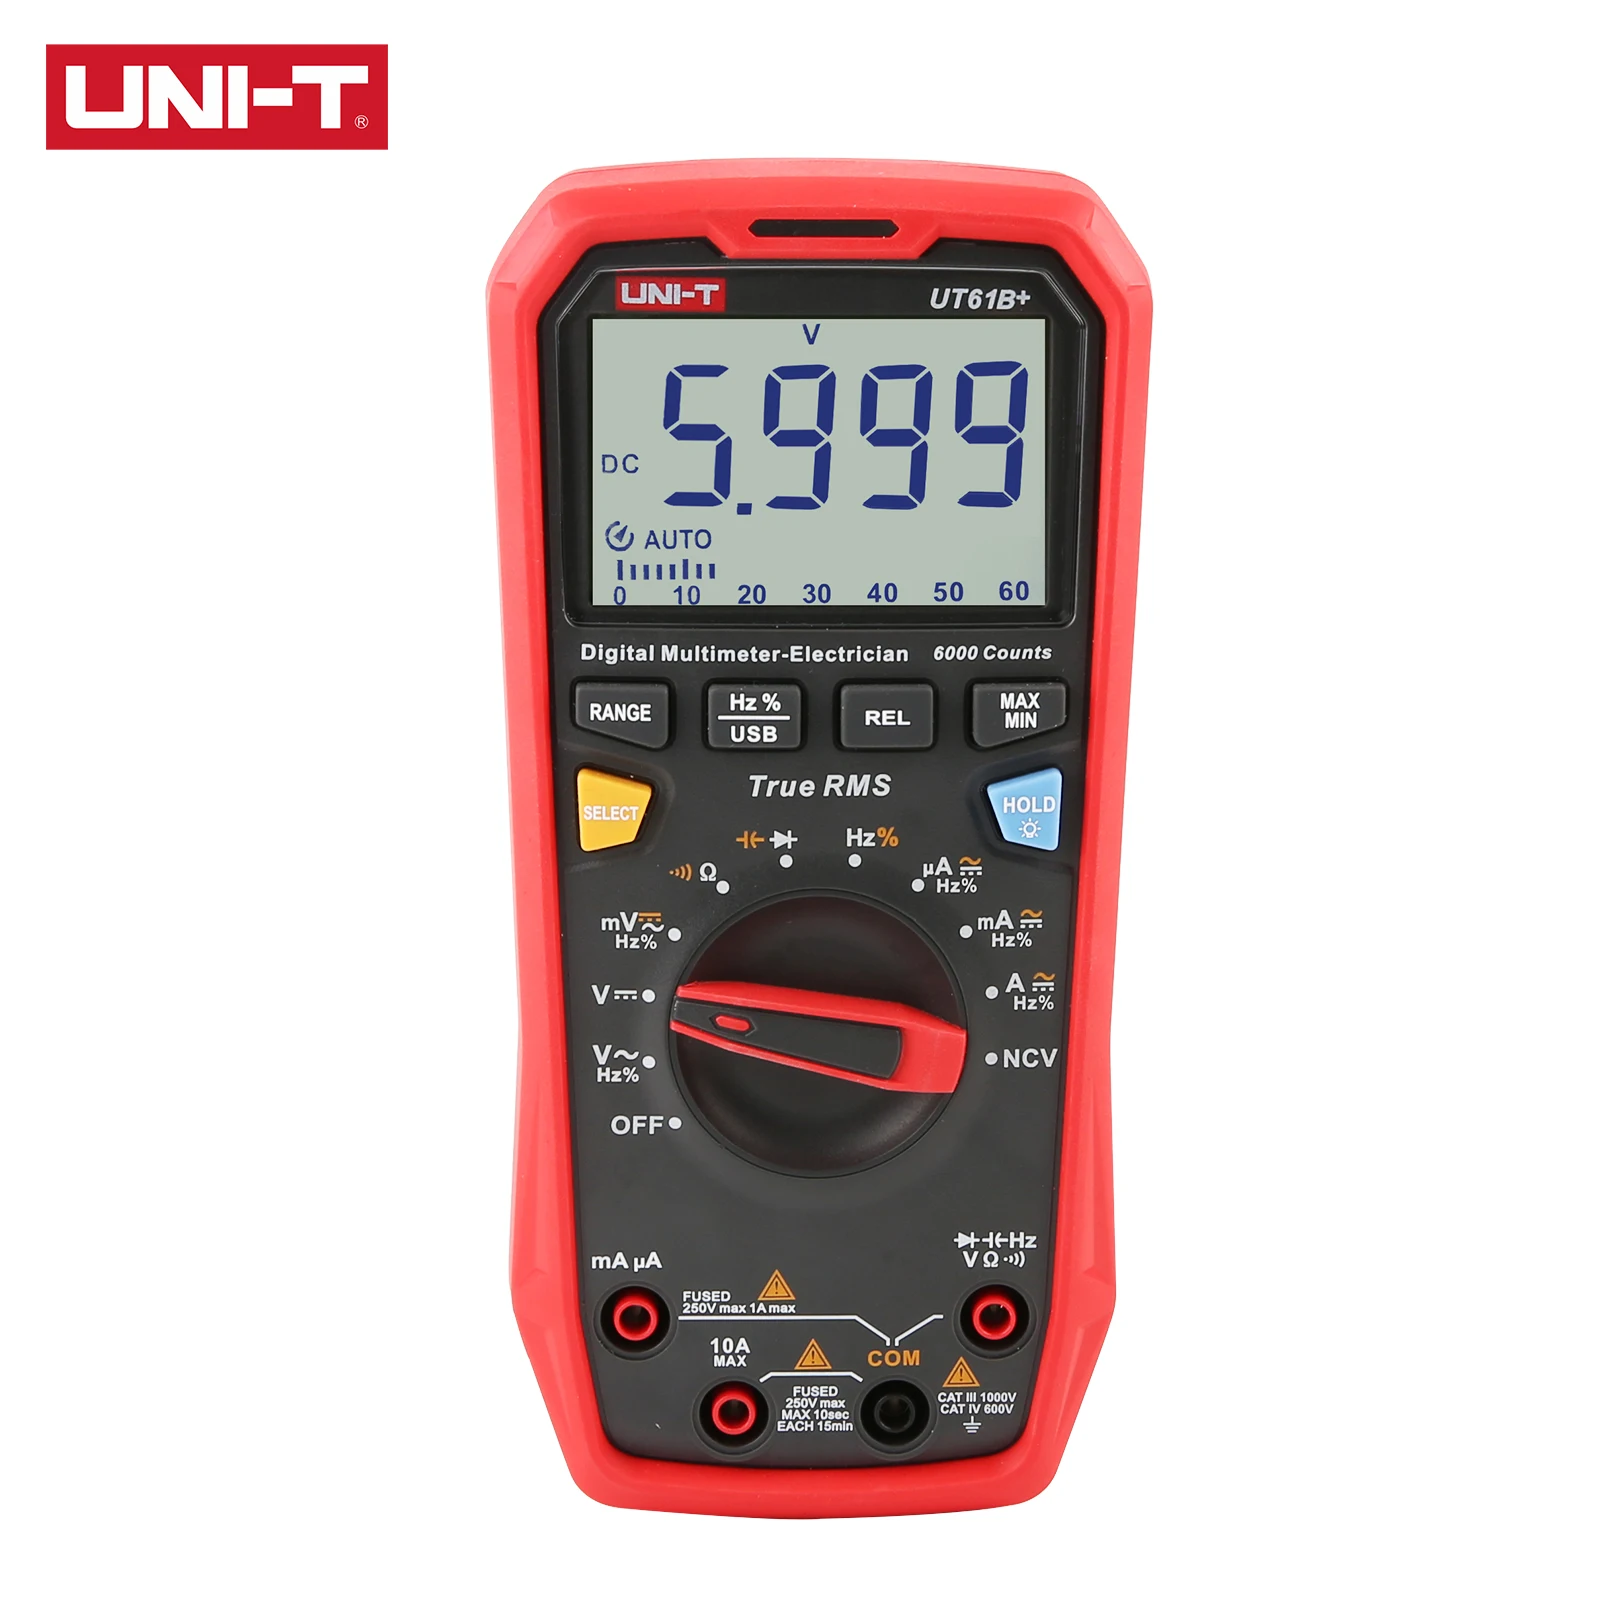 

UNI-T UT61B+ Digital Multimeter 1000V True RMS C/DC Voltage Current Resistance Capacitance Tester with display counts 6000